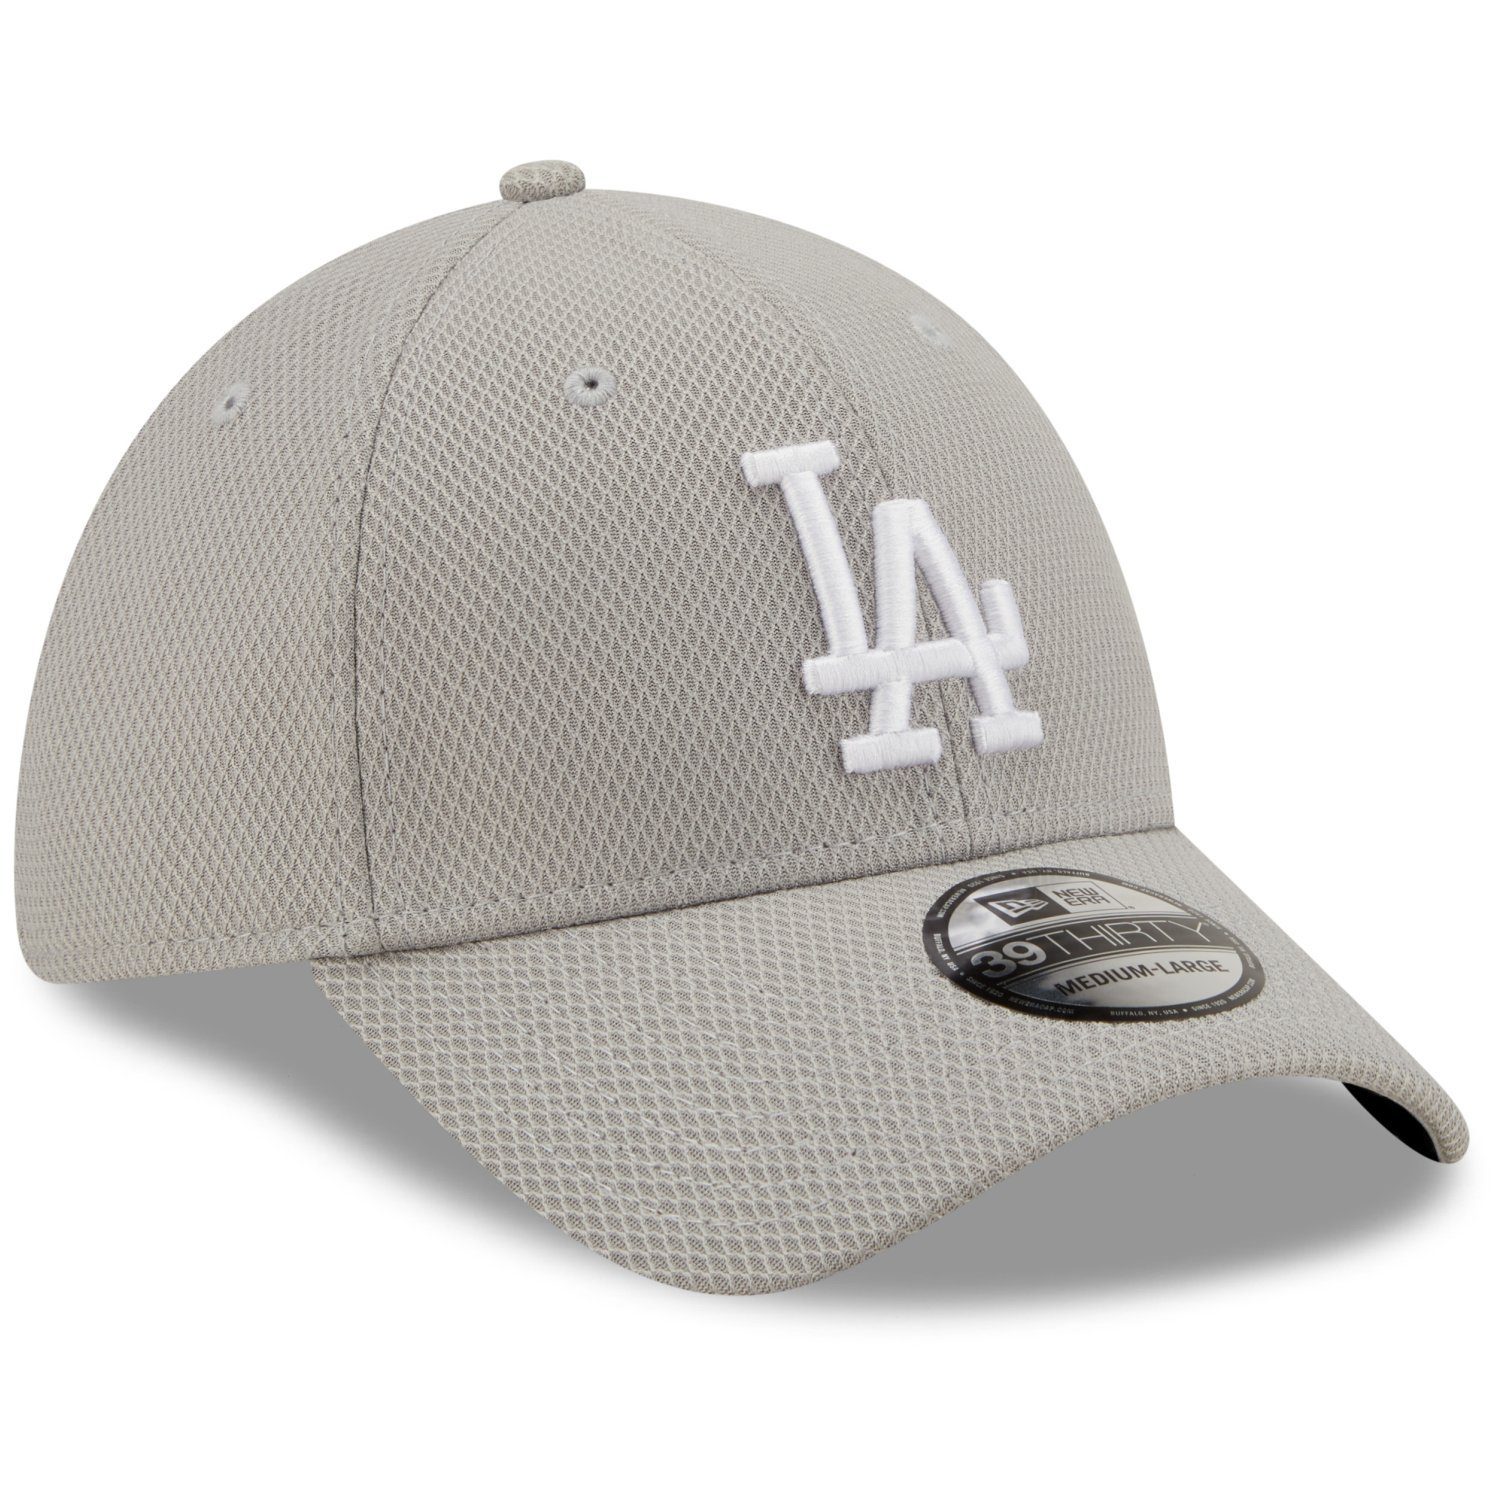 New Era Flex Cap 39Thirty Los Angeles Diamond Dodgers